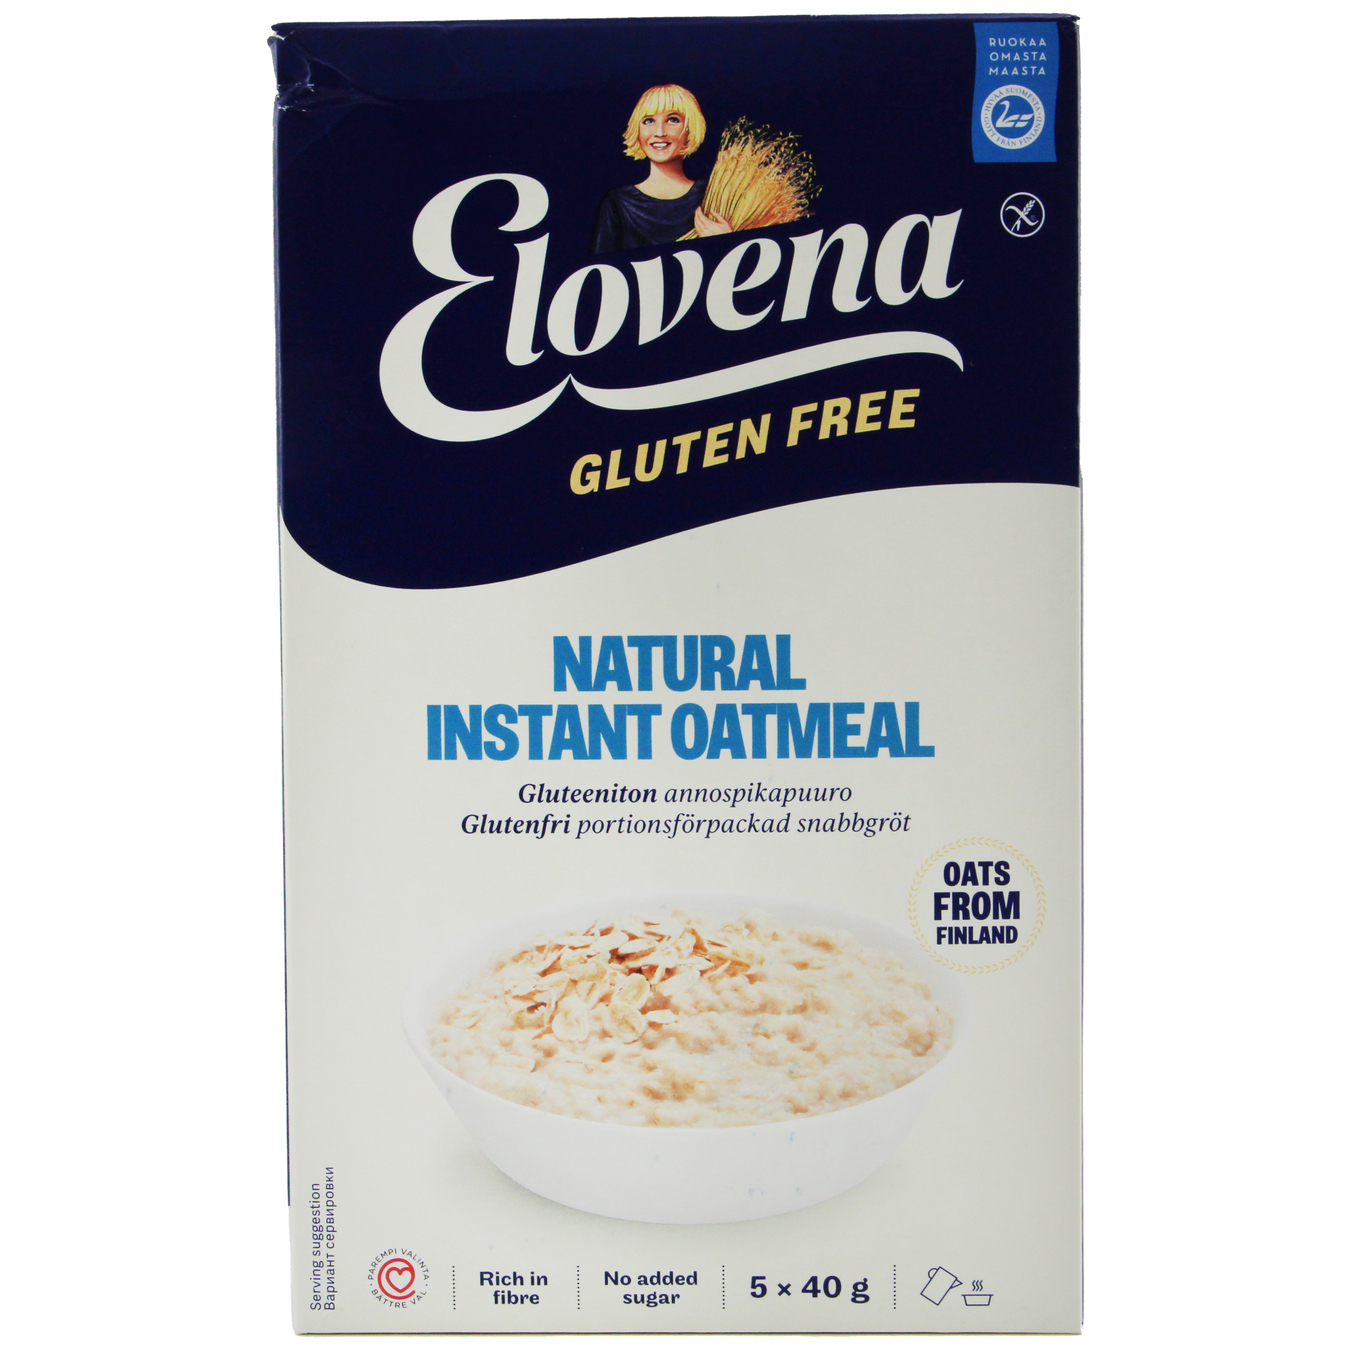 Elovena Gluten Free Instant Oatmeal 200g